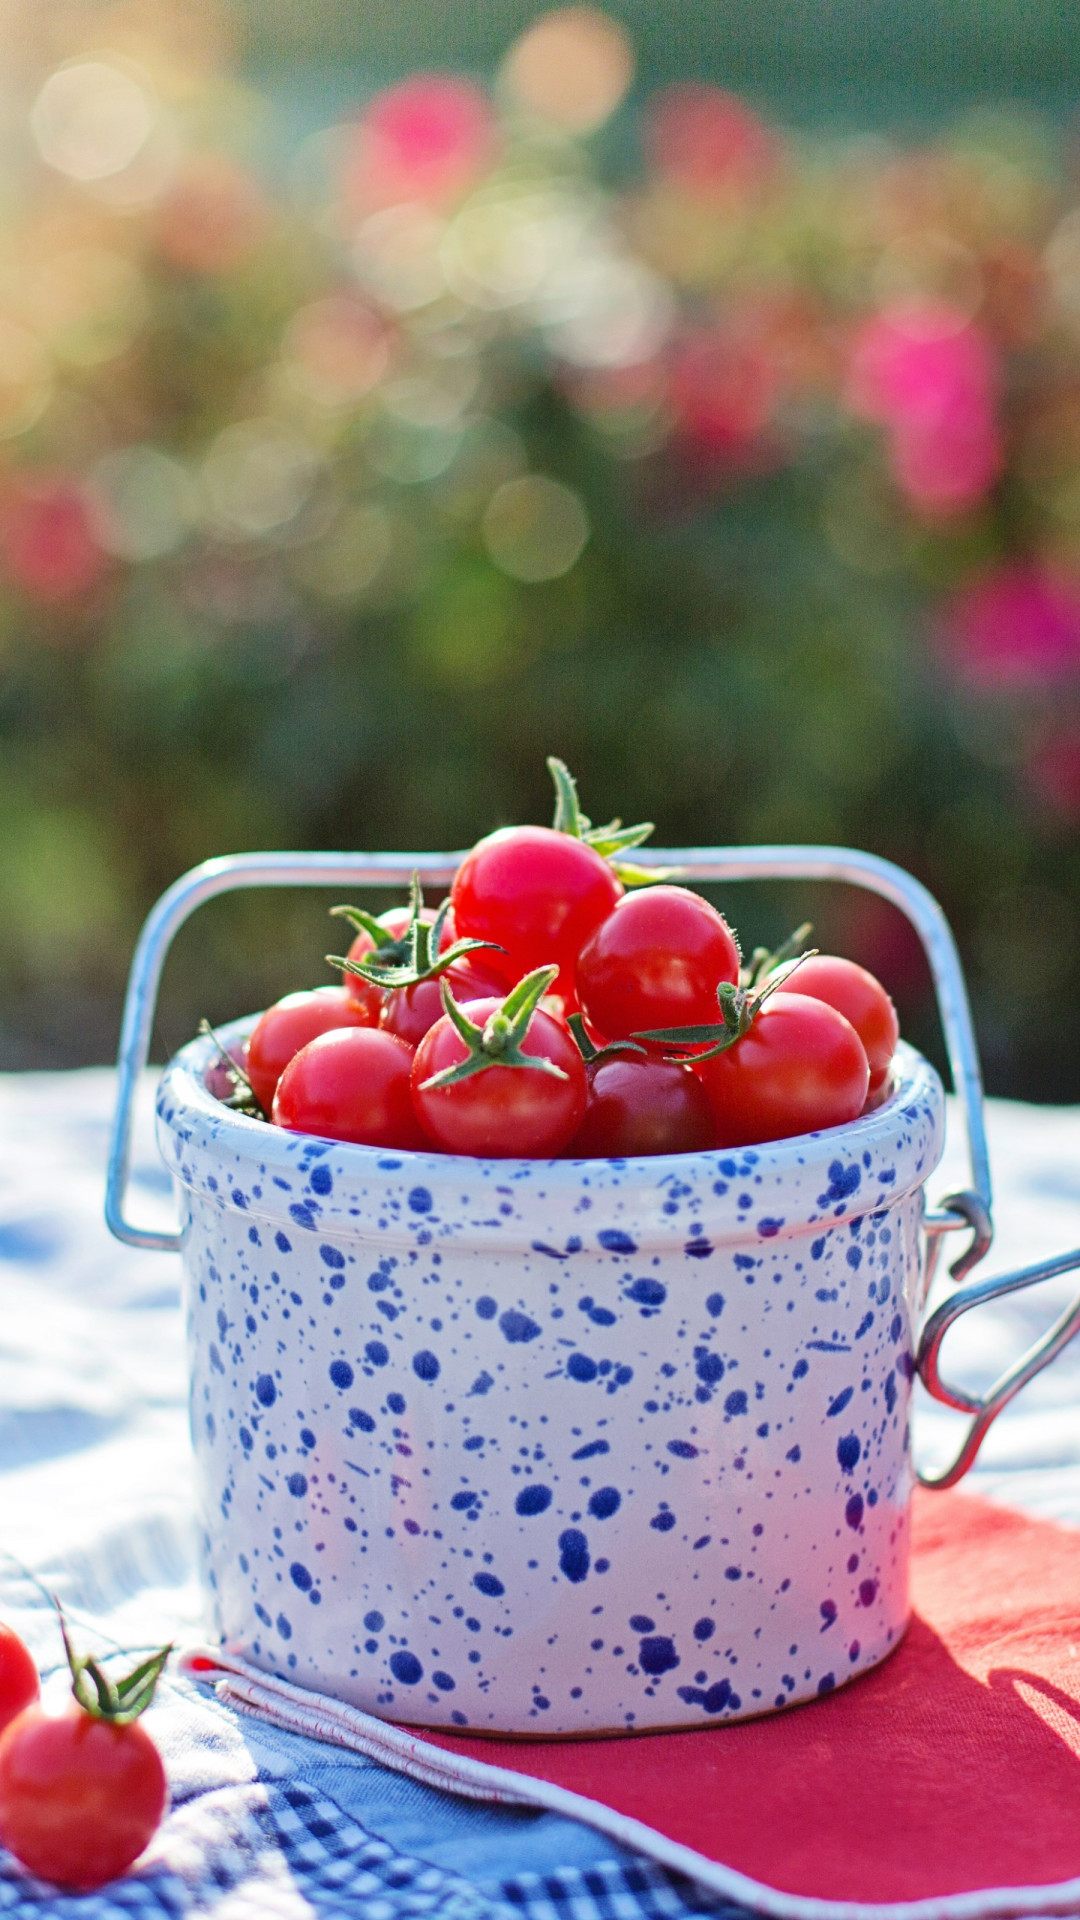 Cherry tomatoes wallpaper 1080x1920